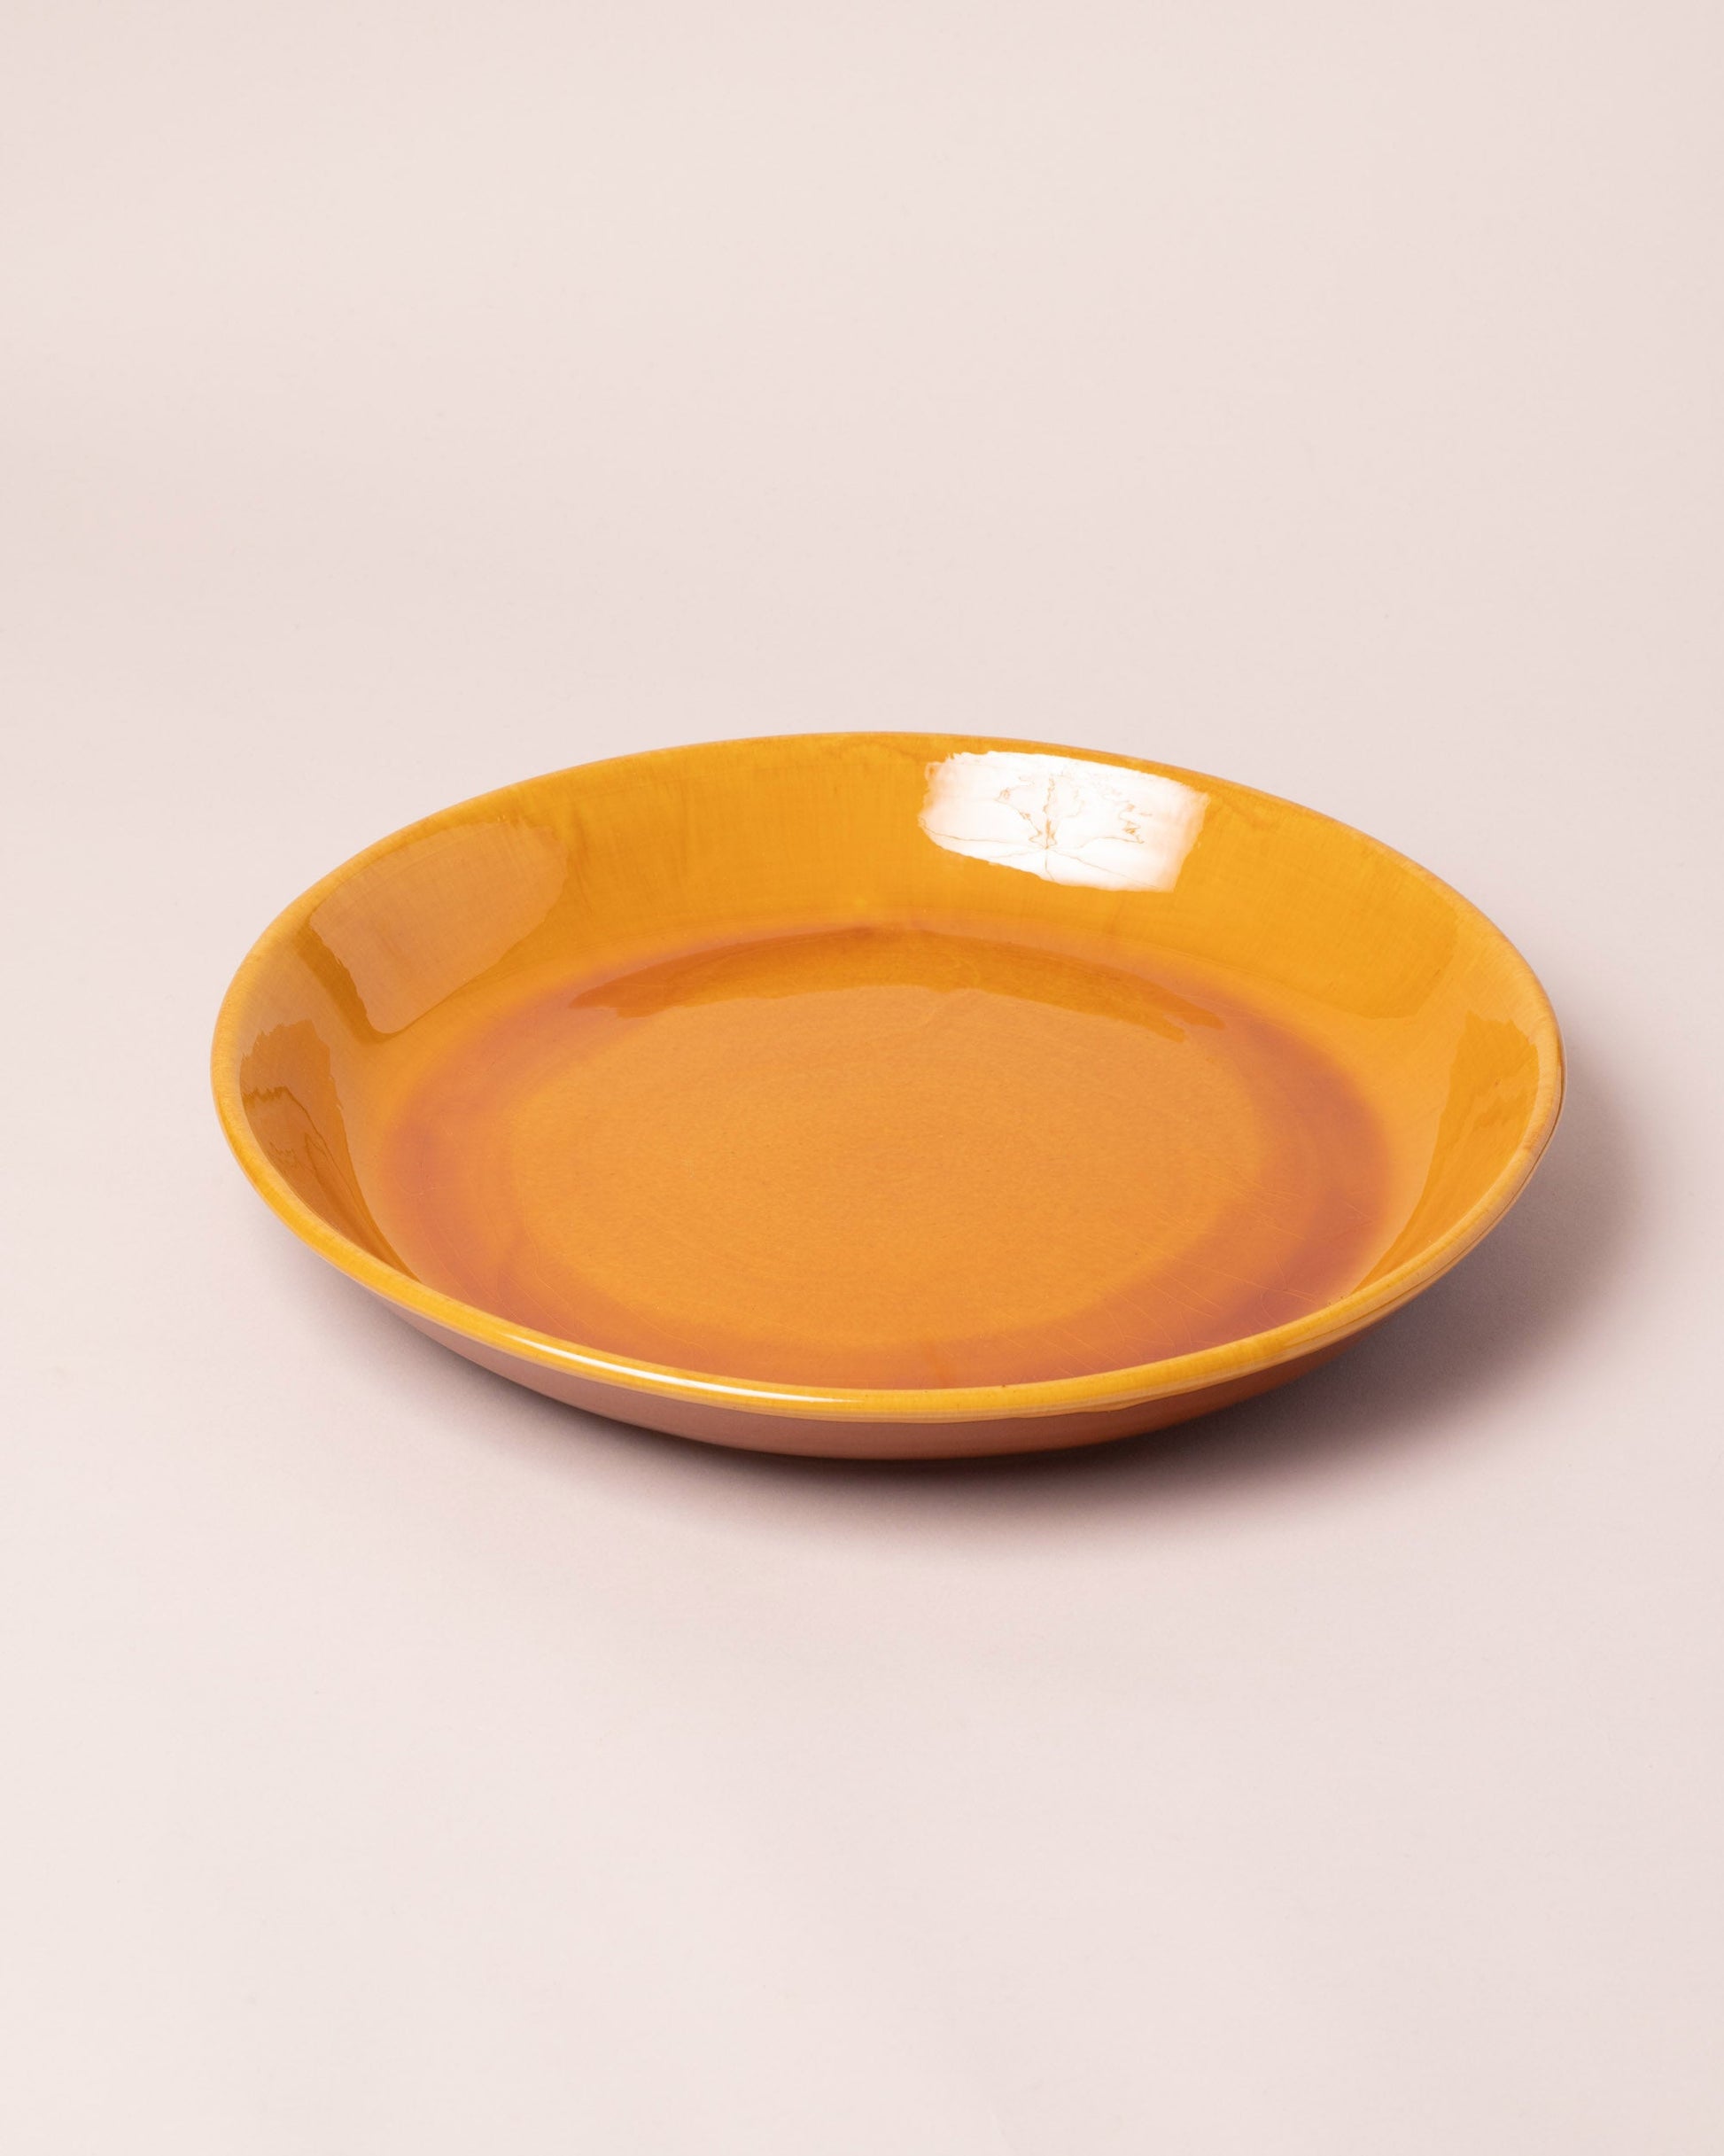 La Ceramica Vincenzo Del Monaco Caramel Yellow Circular Serving Dish on light color background.